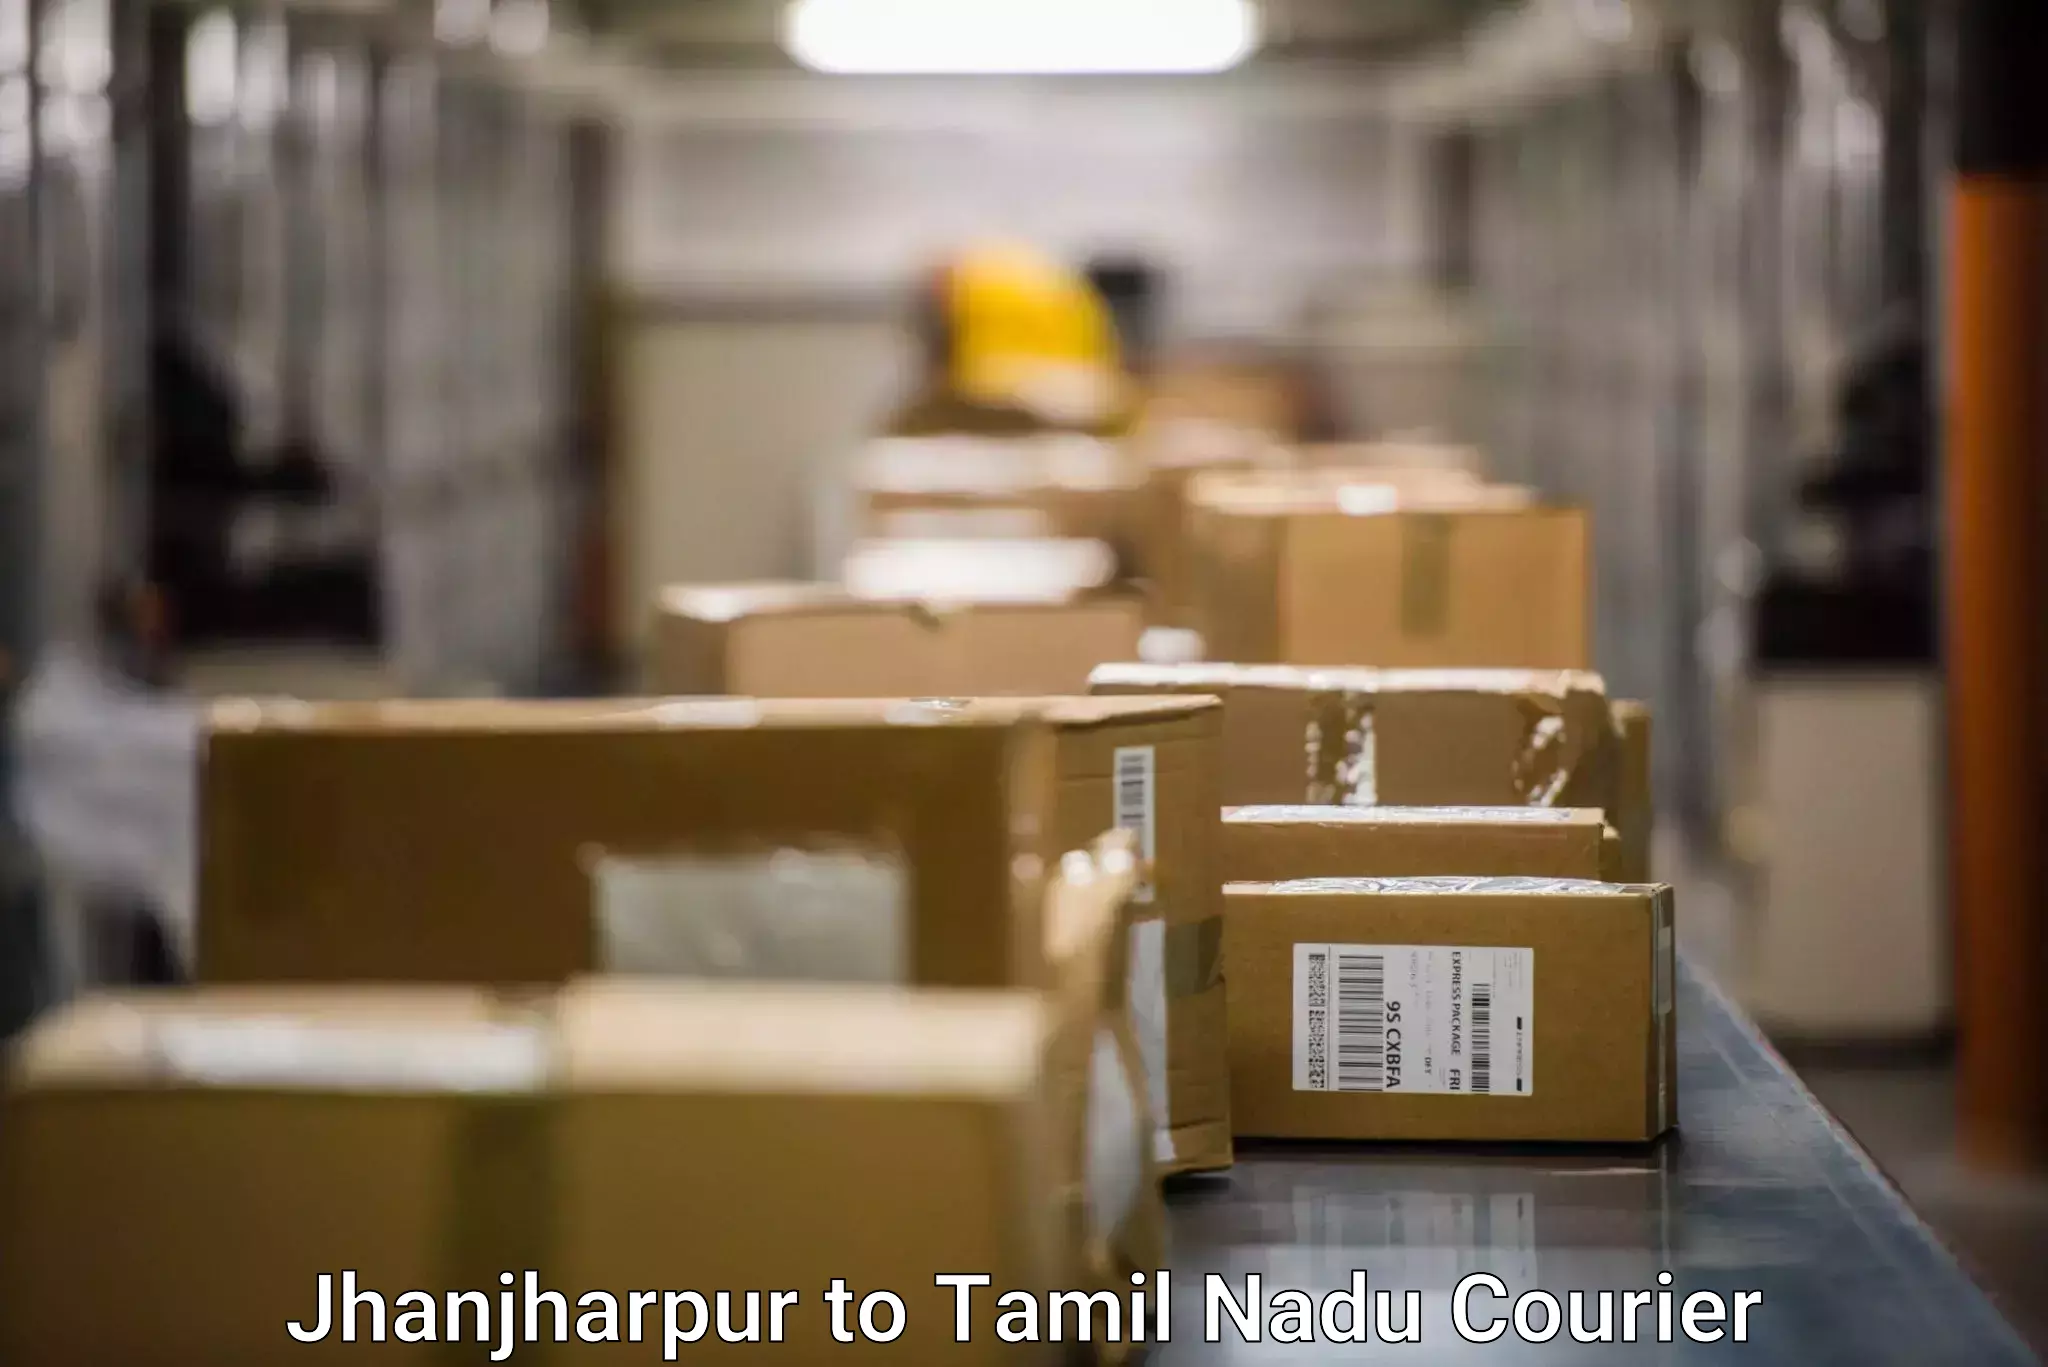 Express mail solutions Jhanjharpur to Chennai